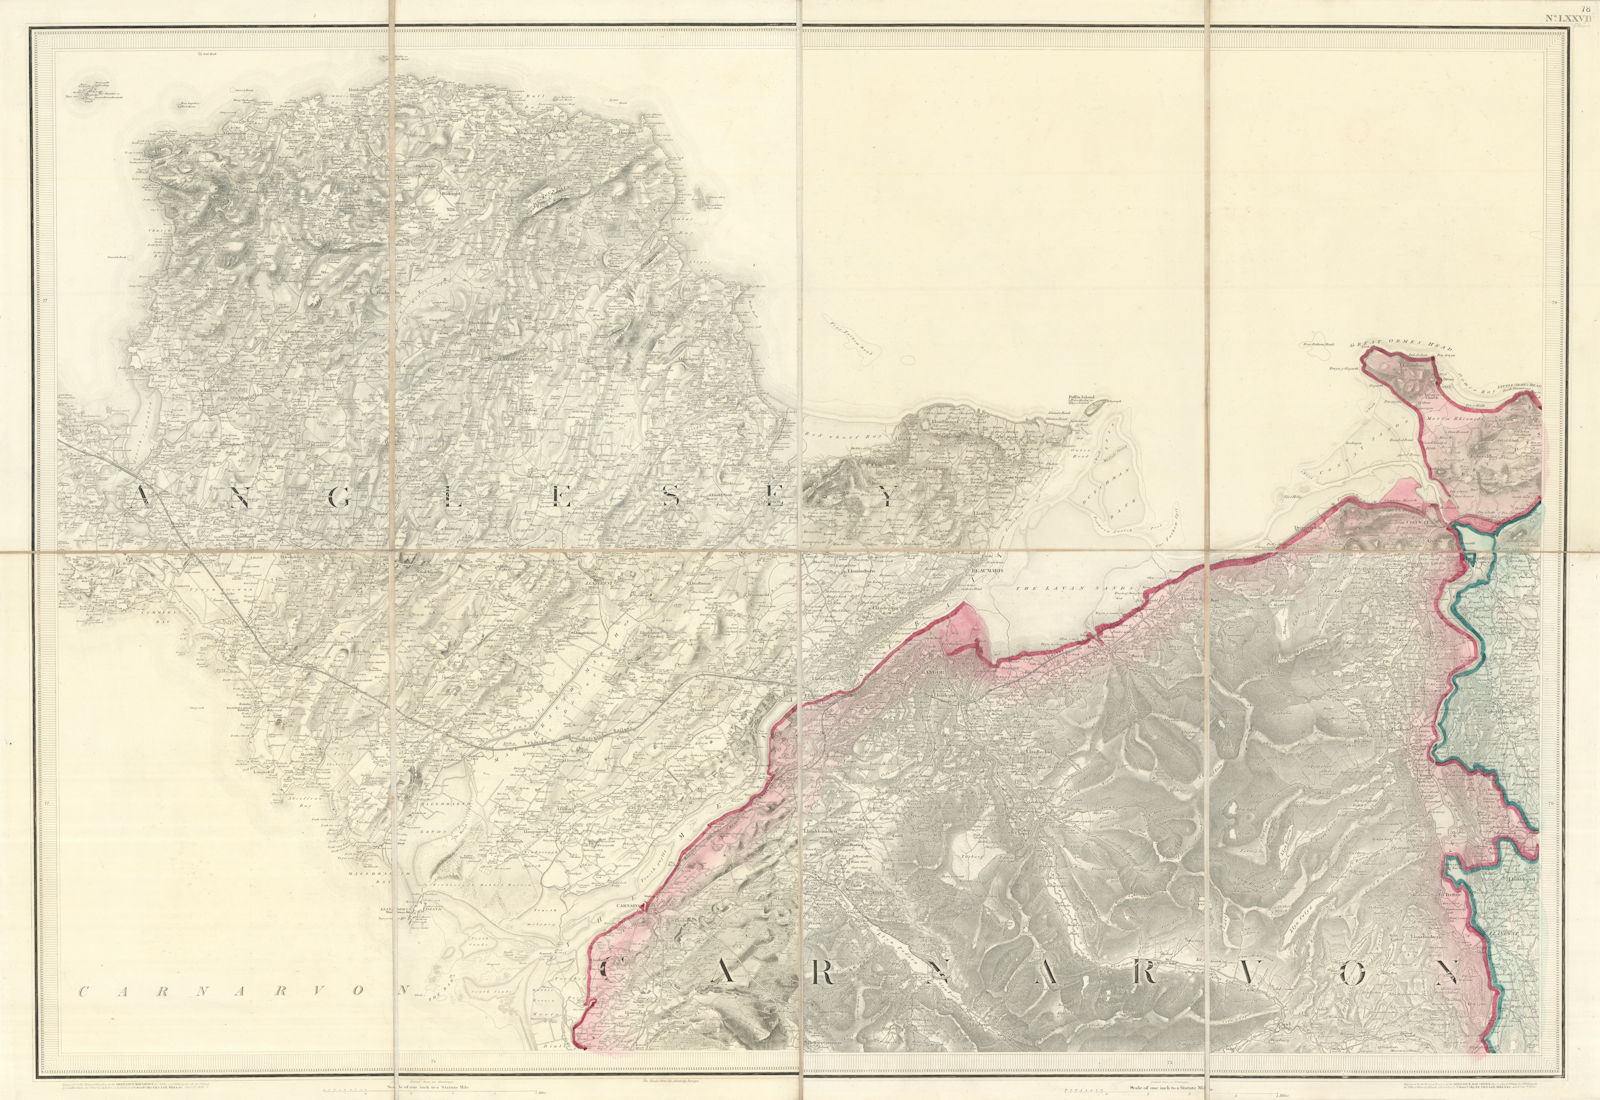 OS #78 Anglesey, Arfon, North Snowdonia & Conwy Valley. Caernarfon 1841 map